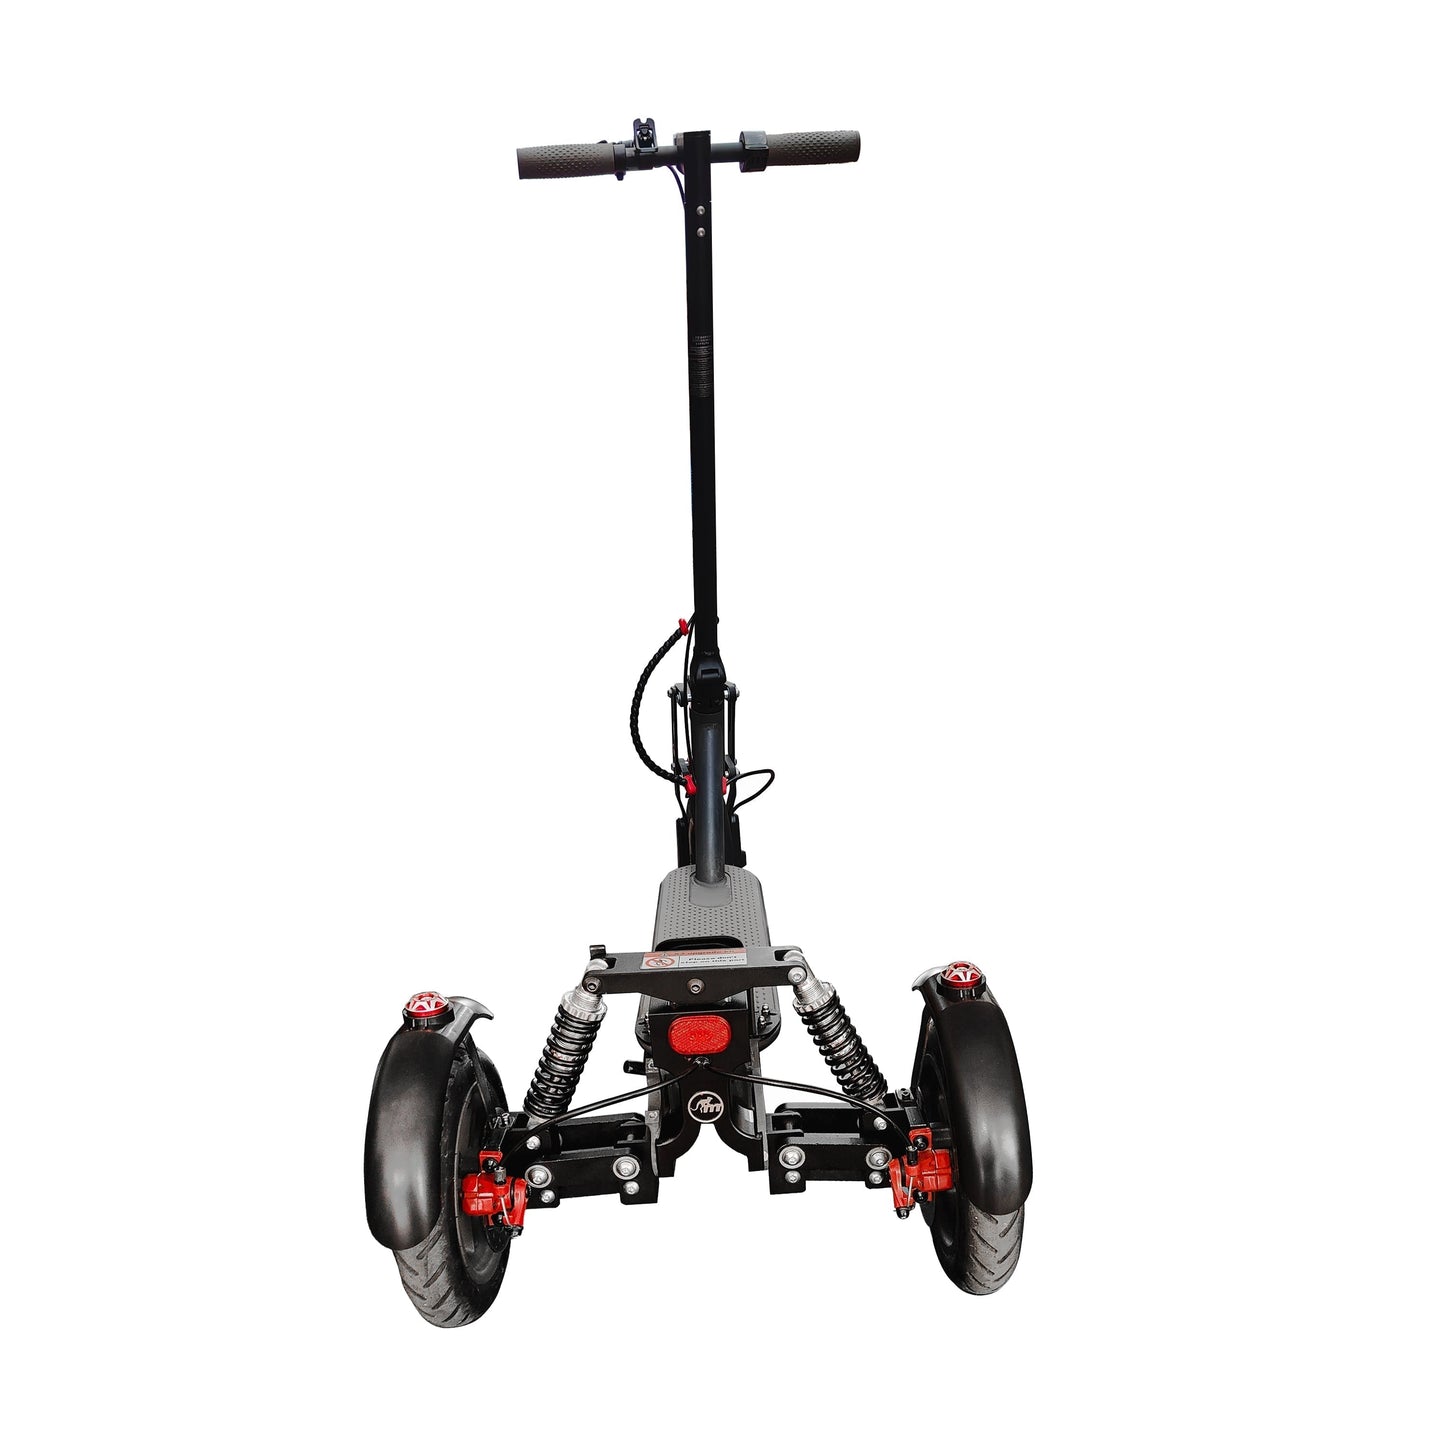 Monorim X3 upgrade kit to be Three wheels special for xiaomi mi3 Scooter